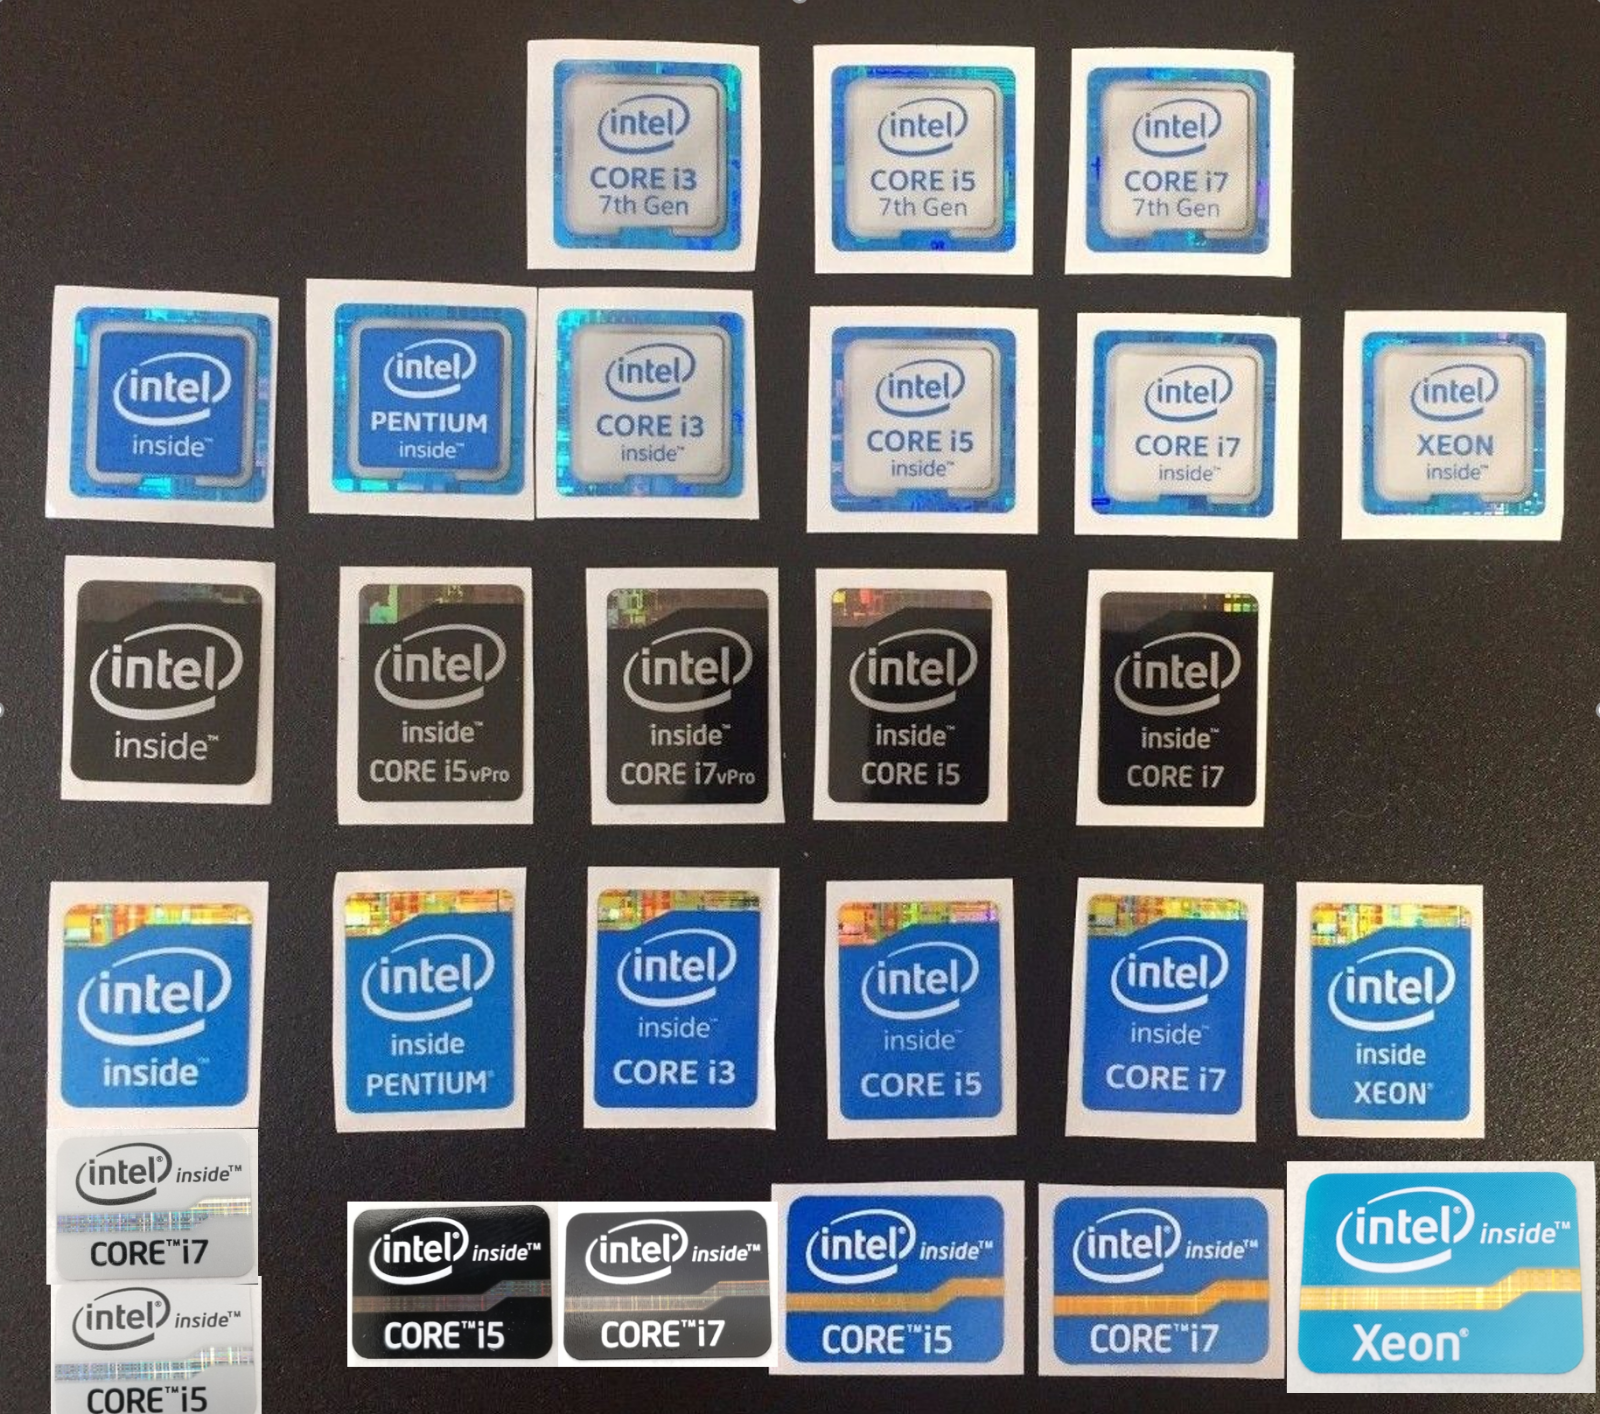 Наклейки intel. Наклейка Intel Core i5 5th Gen. Наклейка Intel Core i7 6th Gen. Наклейка Intel Core i7 inside. Intel Core i5 наклейка 7 Gen.